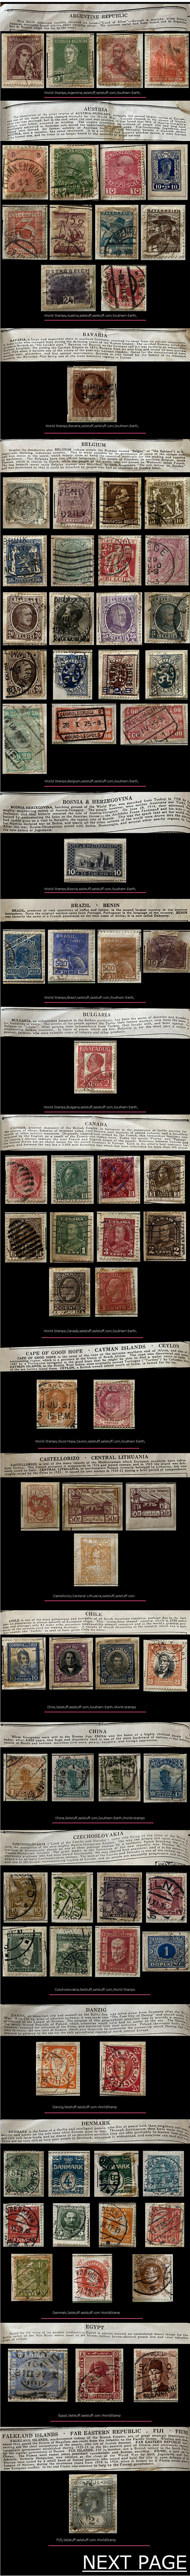 World Stamps. selstuff.com